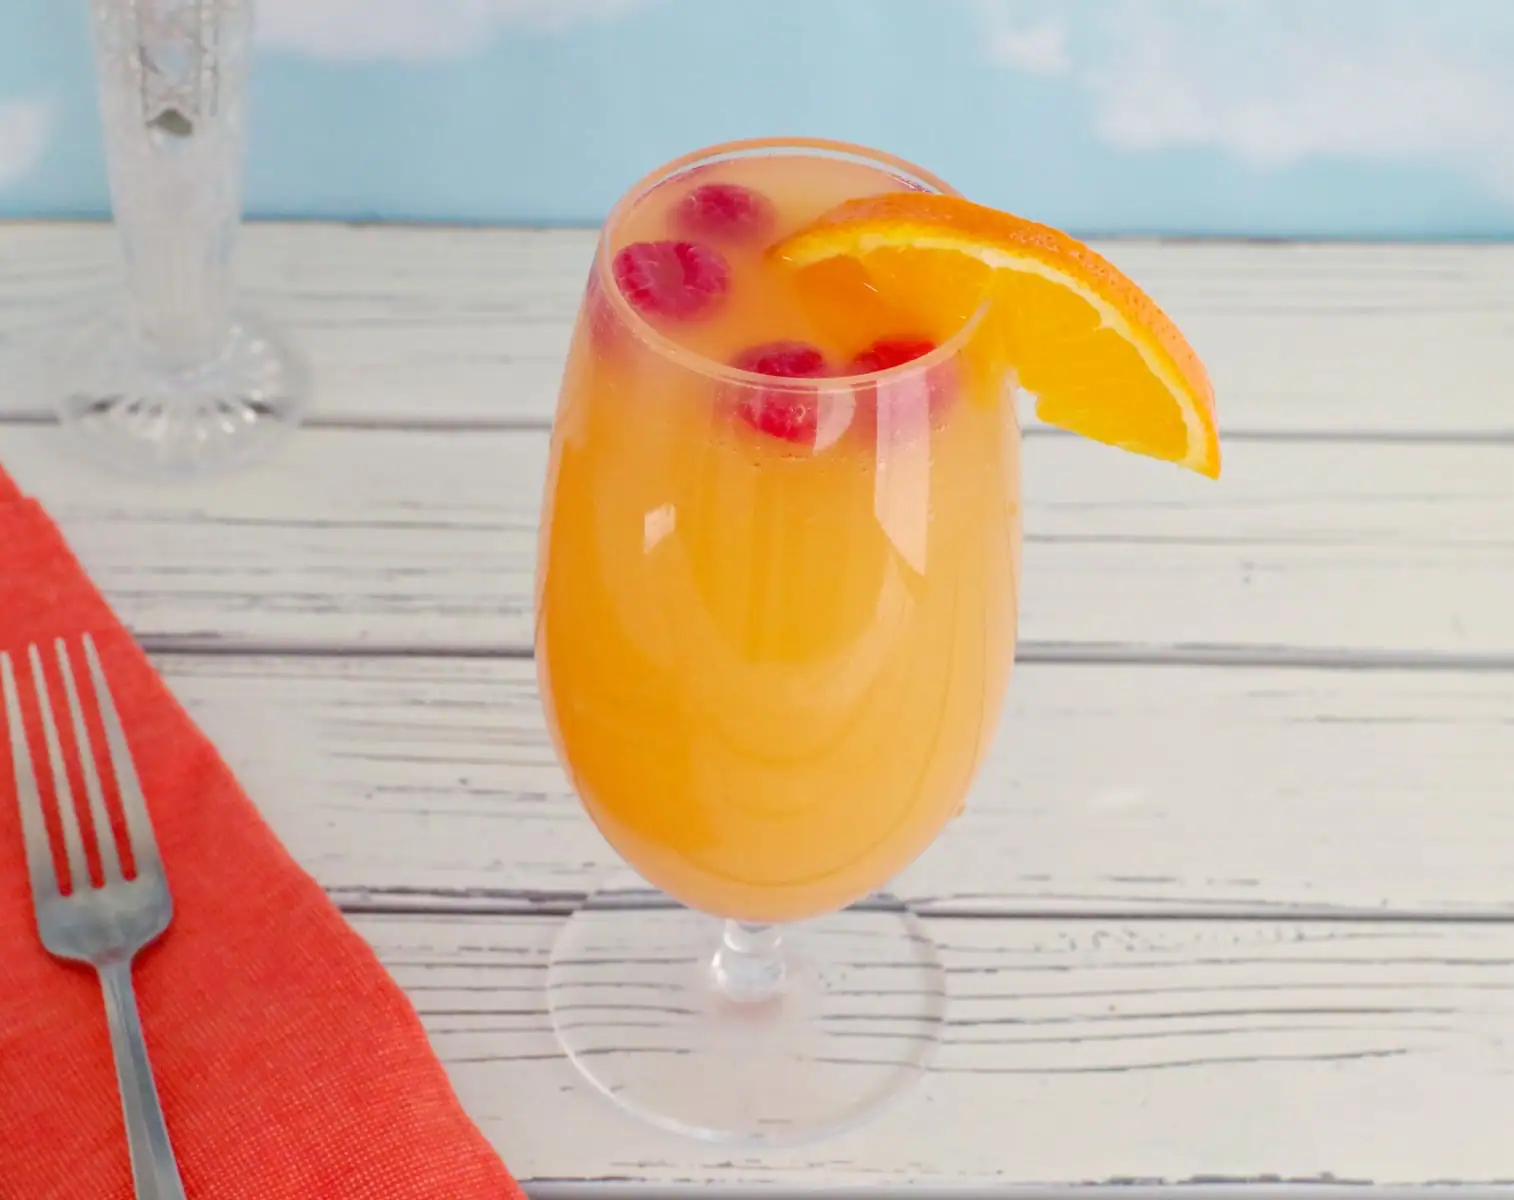 mimosa drink with raspberries and orange garnish